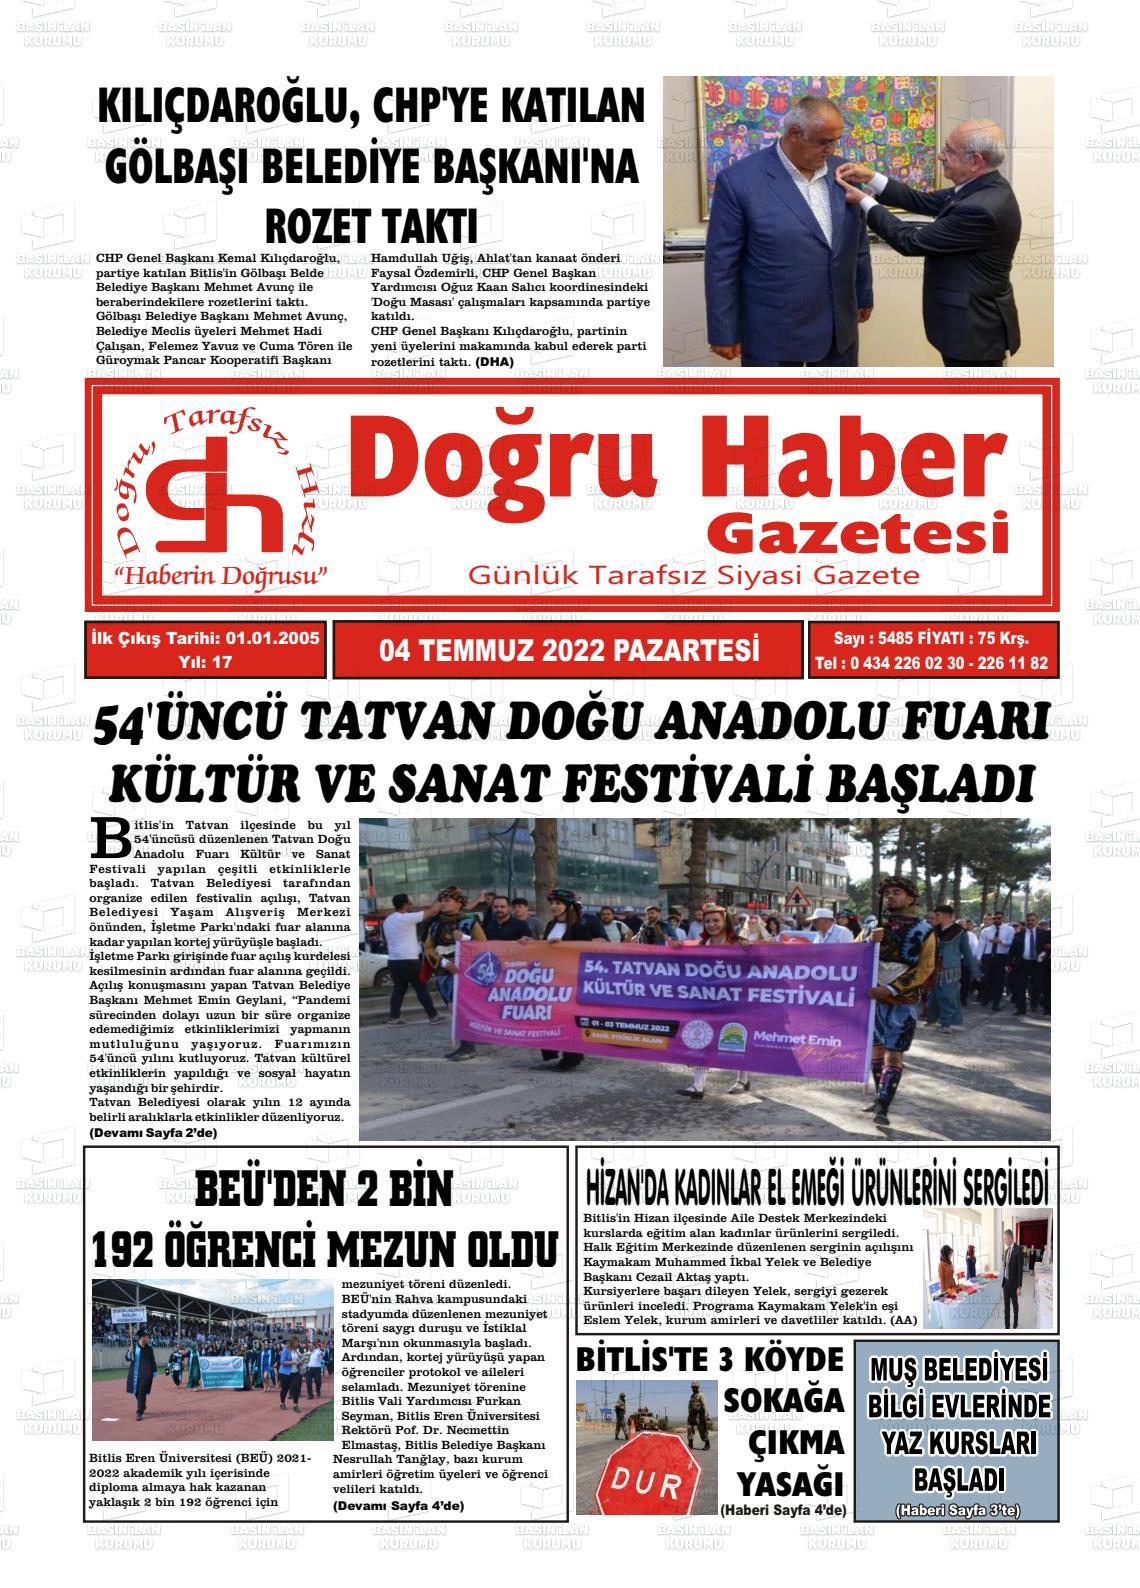 04 Temmuz 2022 Doğru Haber Gazete Manşeti